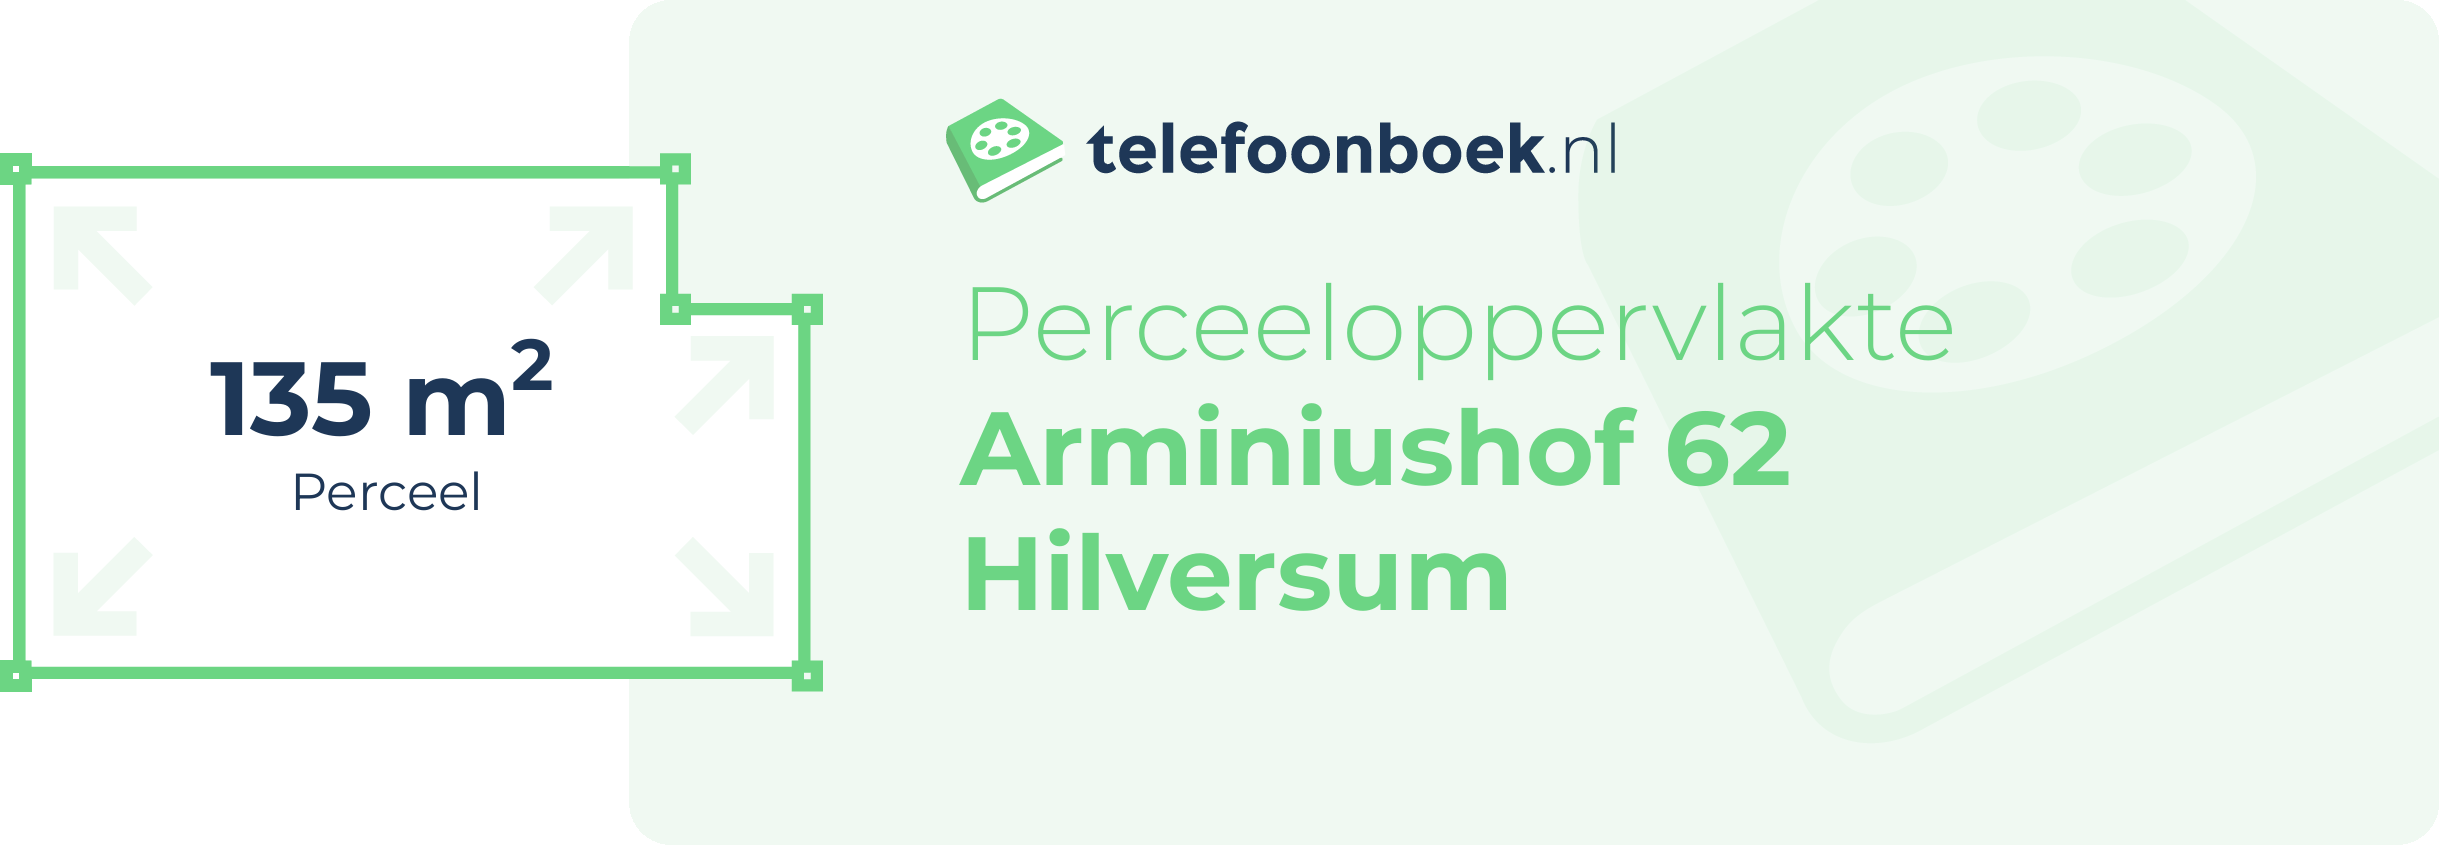 Perceeloppervlakte Arminiushof 62 Hilversum